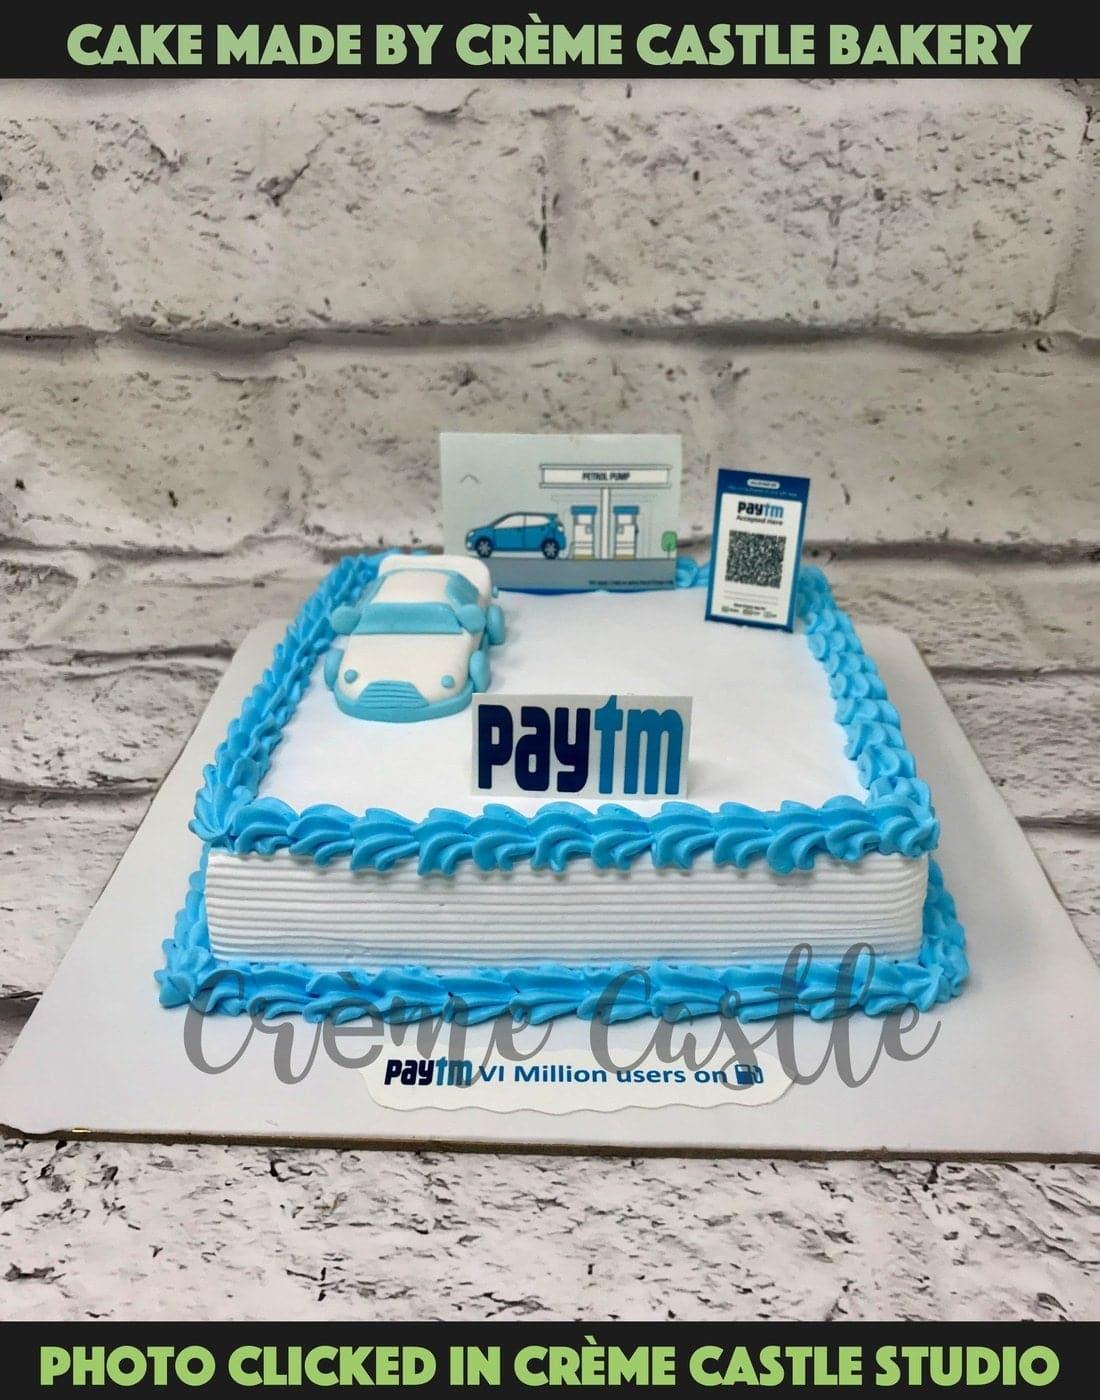 Paytm Car Design Cake - Creme Castle